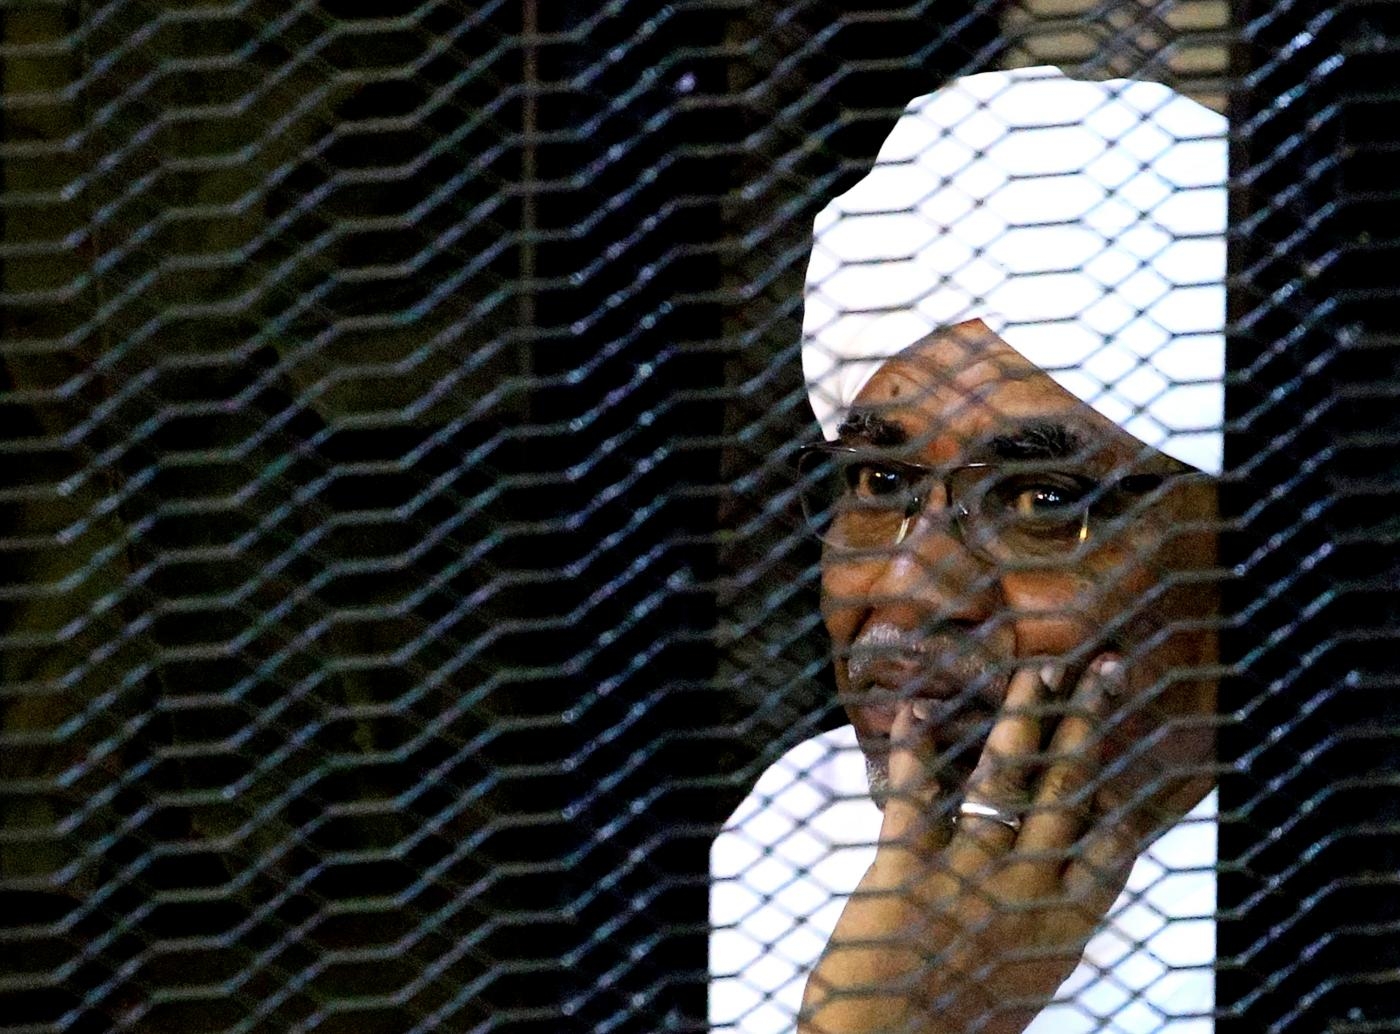 Sudan's Omar al-Bashir sentenced to two years for corruption